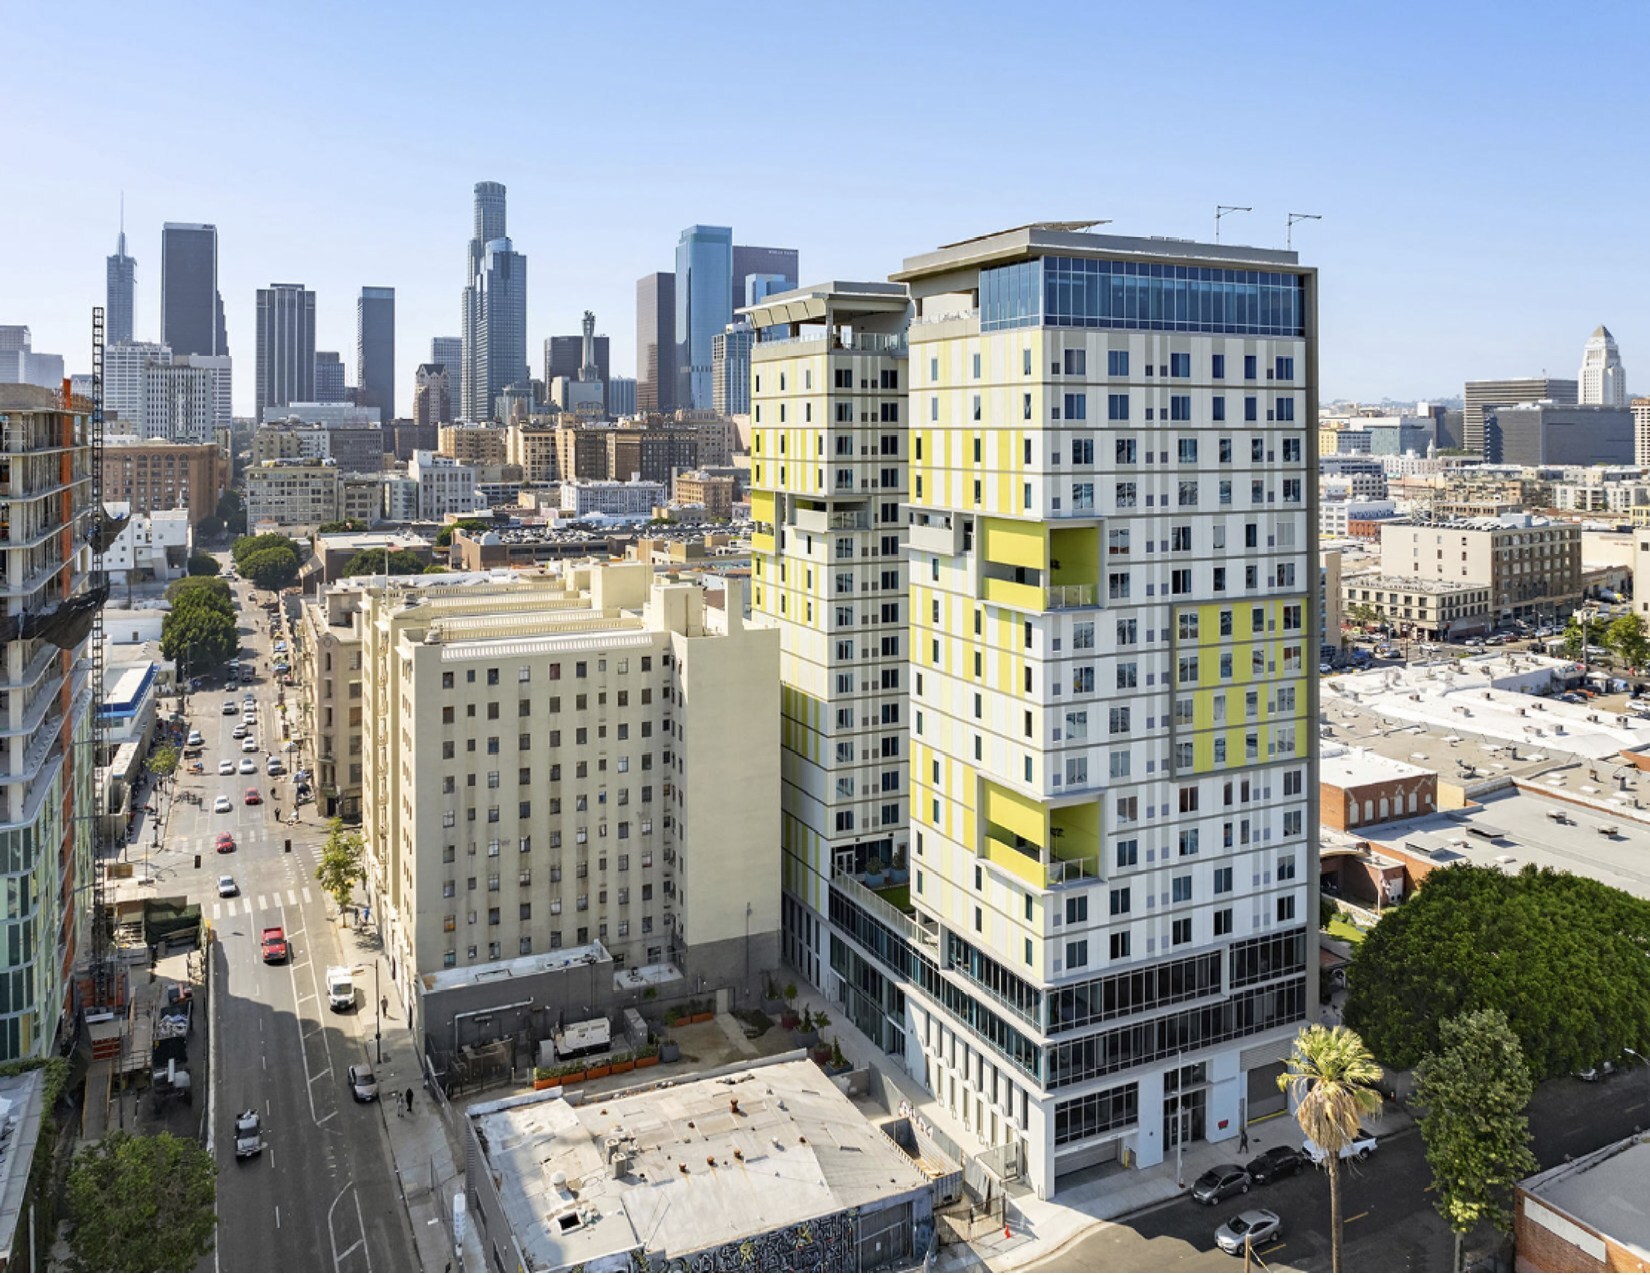 澳洲幸运十官方开奖号码结果视频-历史开奖号码查询 The Richman Group Affordable Housing Opens Largest Housing Development for Unhoused in Los Angeles with 278-Unit Weingart Tower